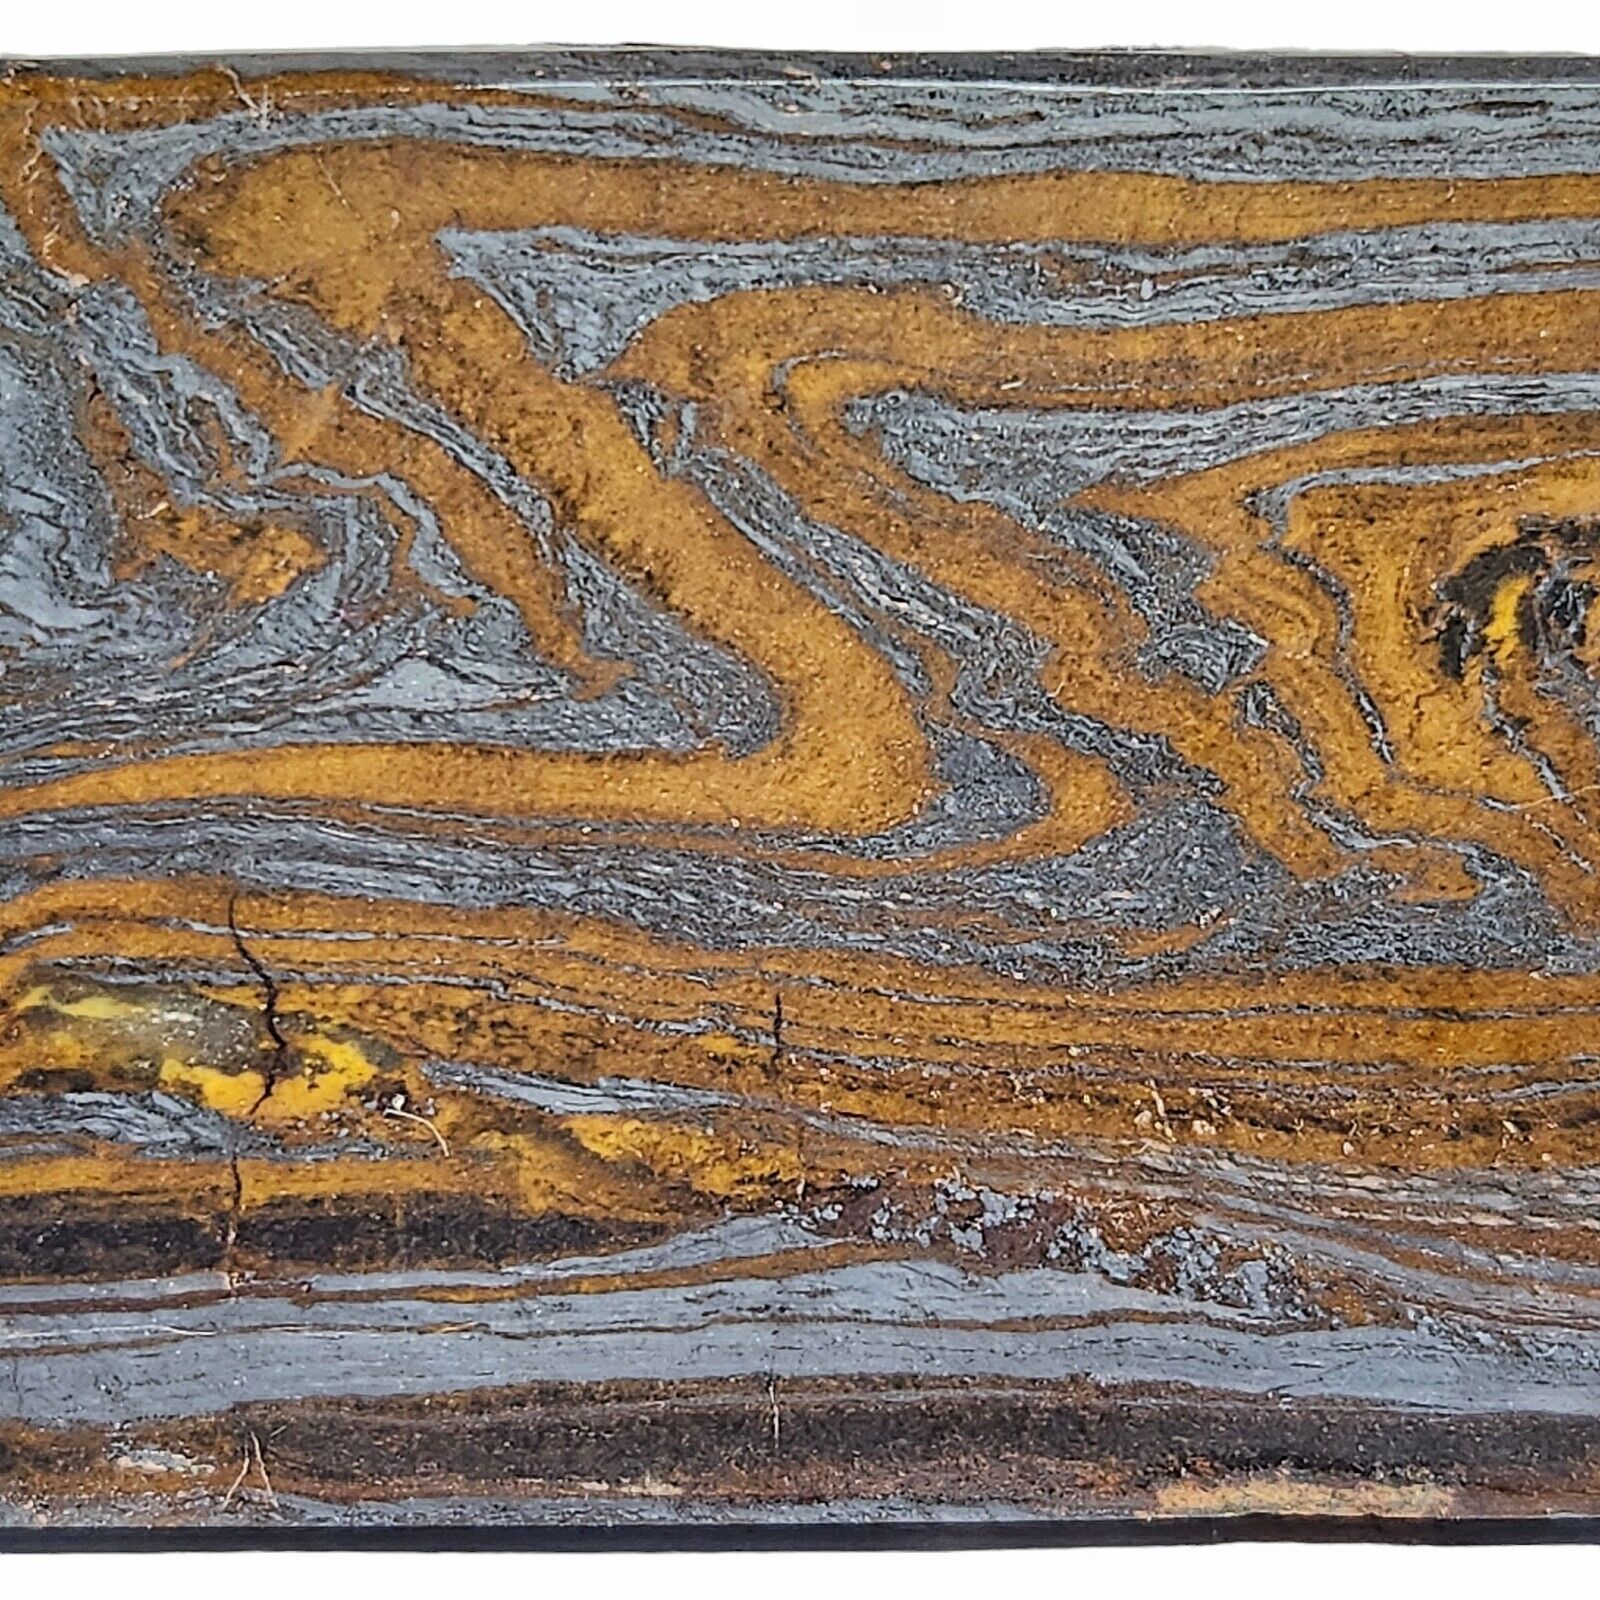 Polished Banded Iron Formation Slab BIF Jasper Hematite, Western Australia, 245g